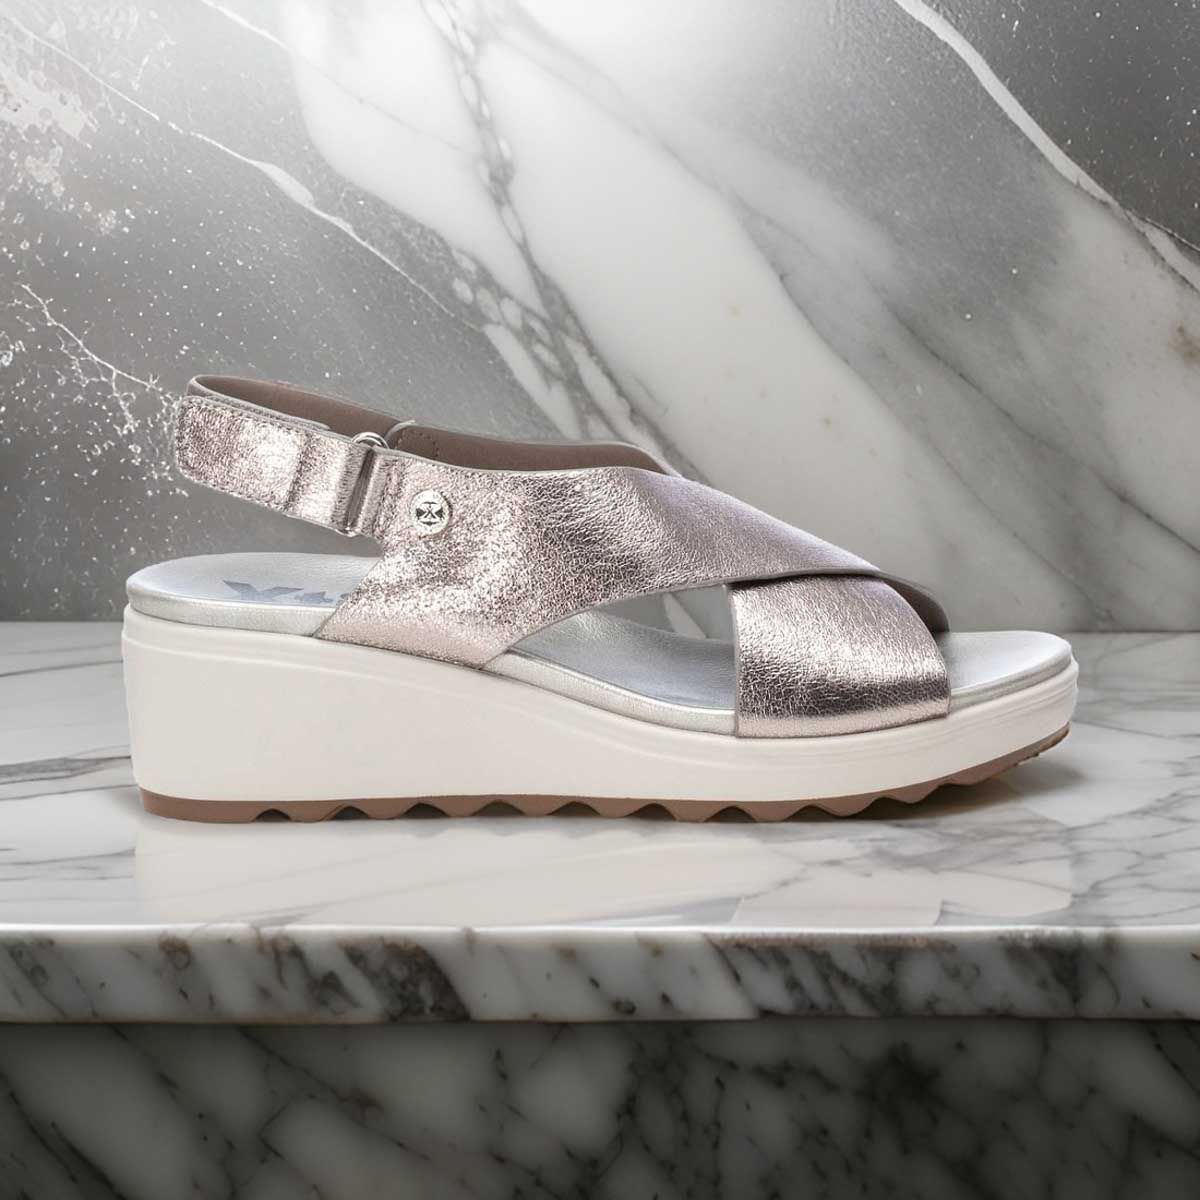 XTI Metallic Silver Vegan Cross-Strap Sandals with Velcro Slingback